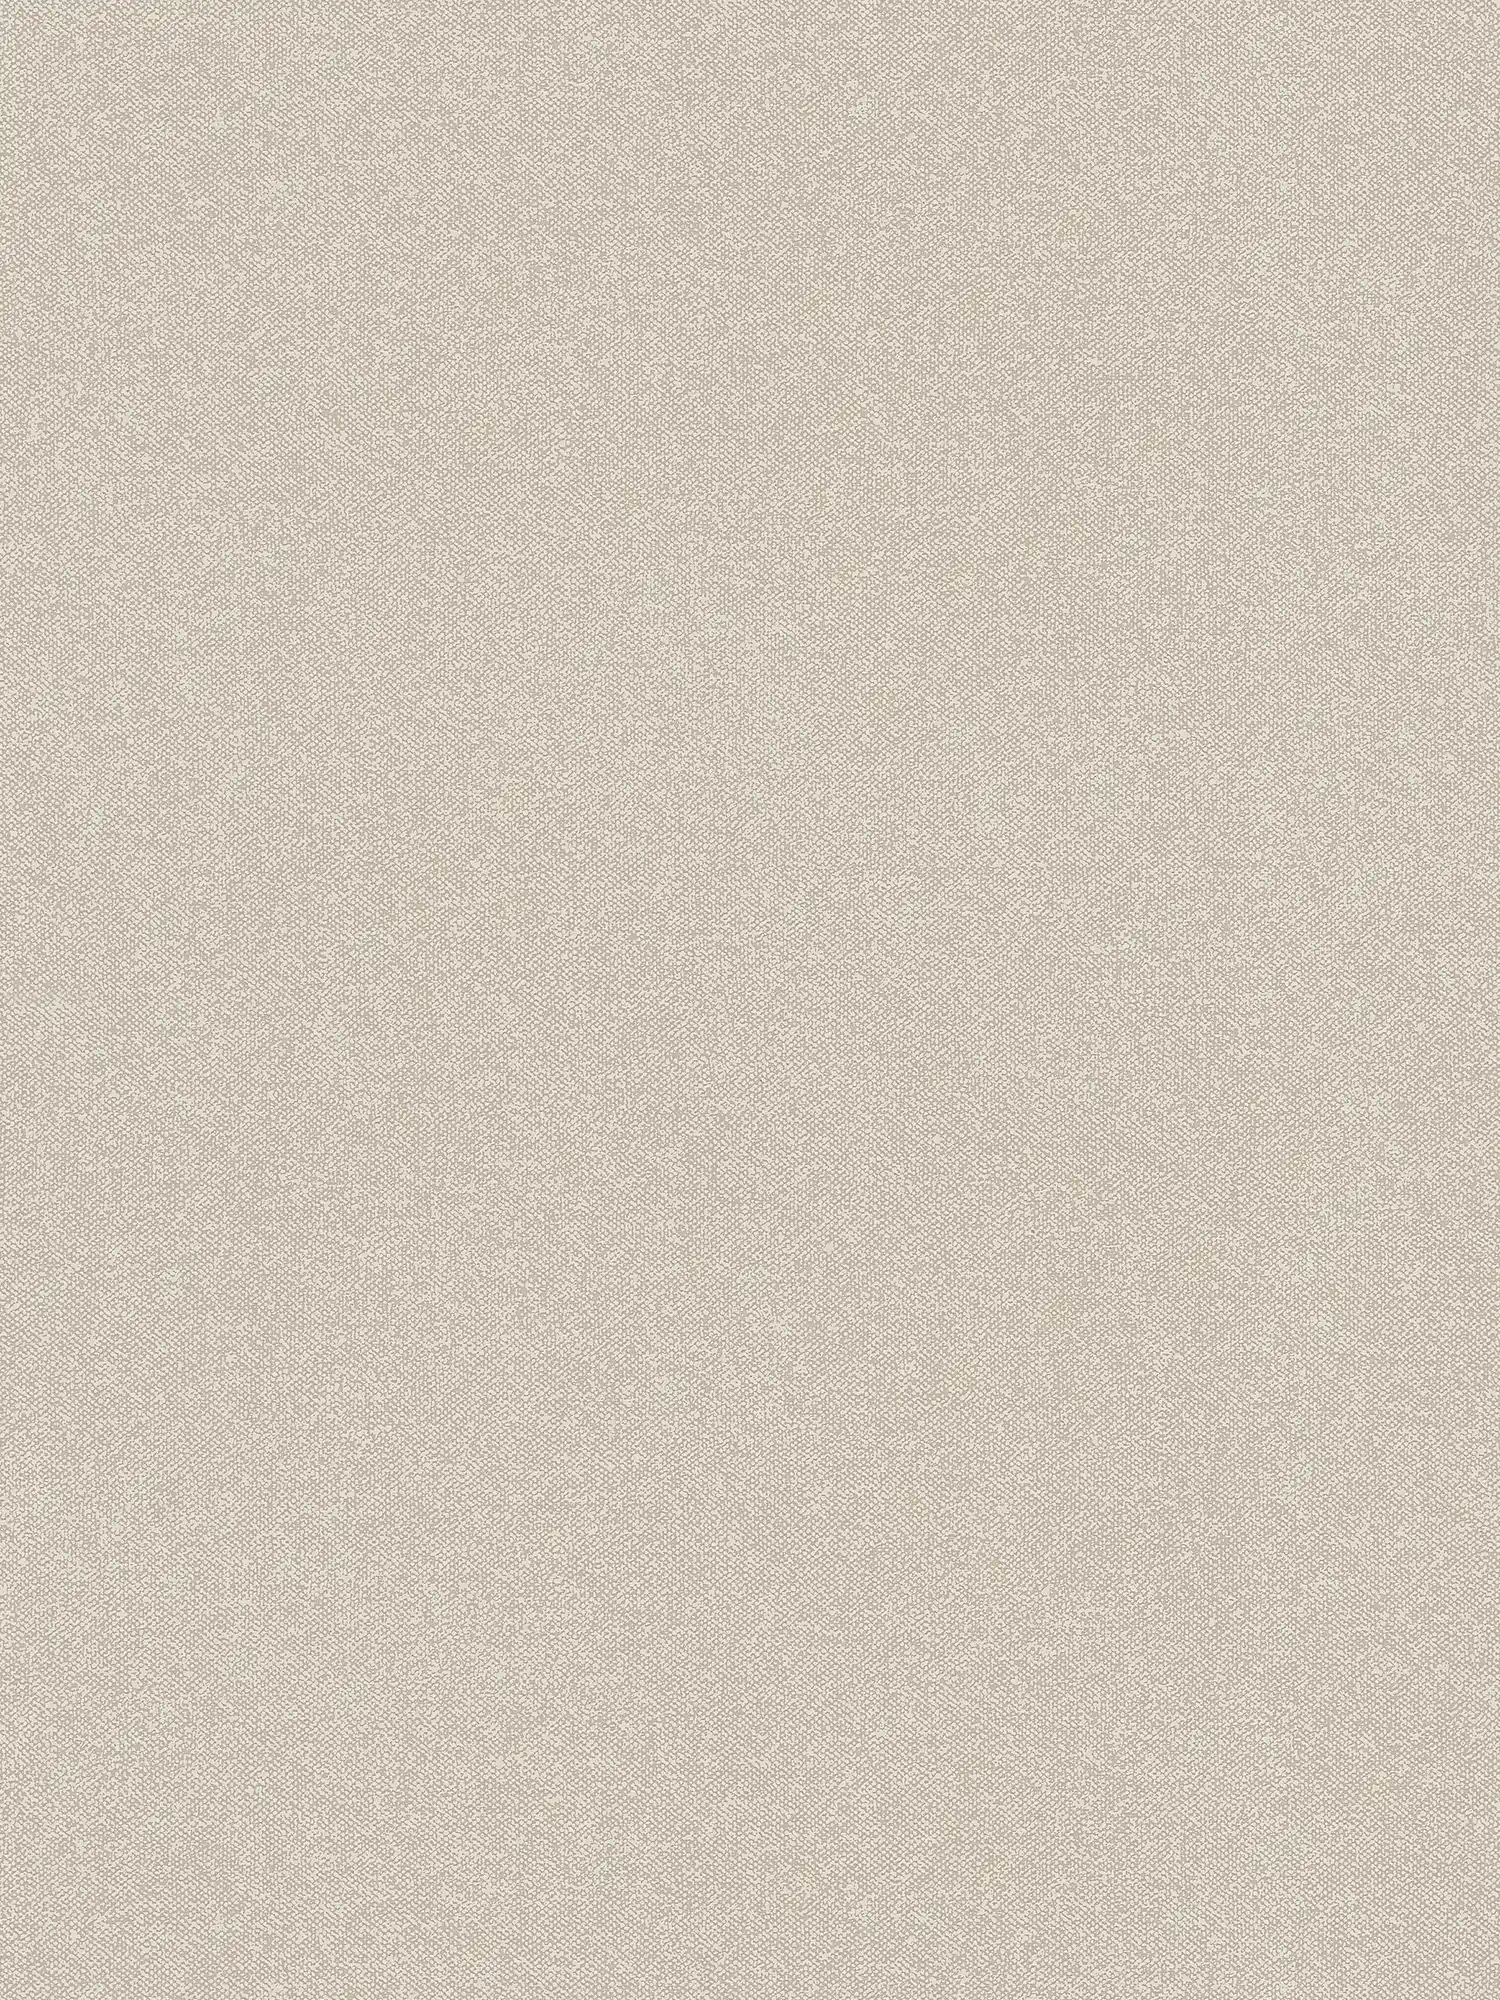 Papel pintado de aspecto textil liso - beige, crema
